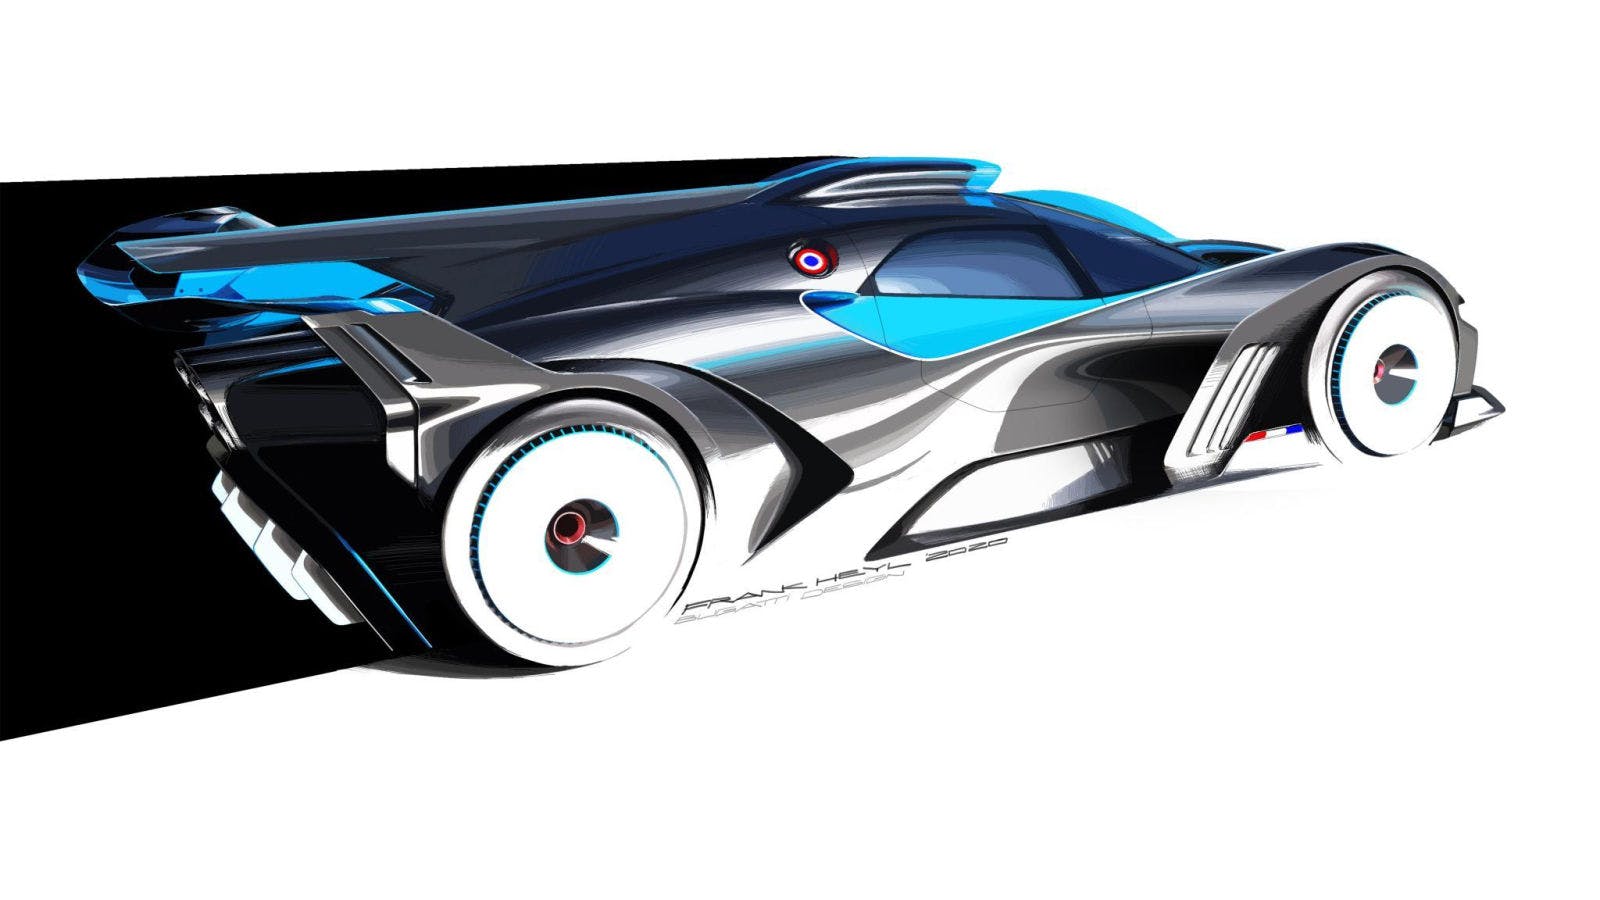 Croquis de design du Bolide de Bugatti – Frank Heyl, Bugatti Design